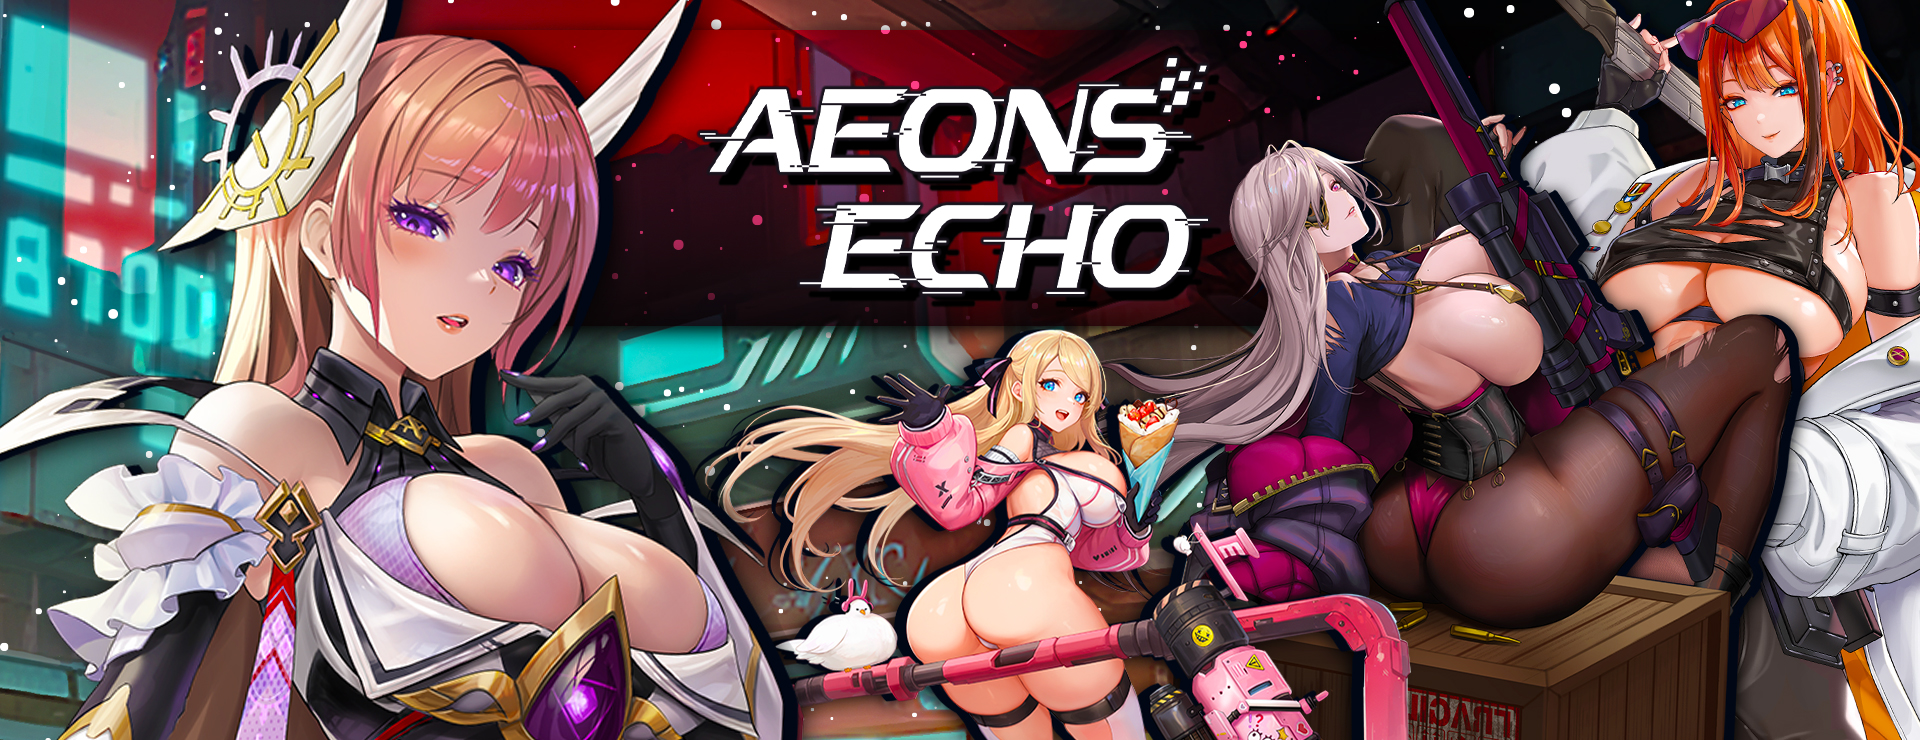 Aeons Echo - カジュアル ゲーム